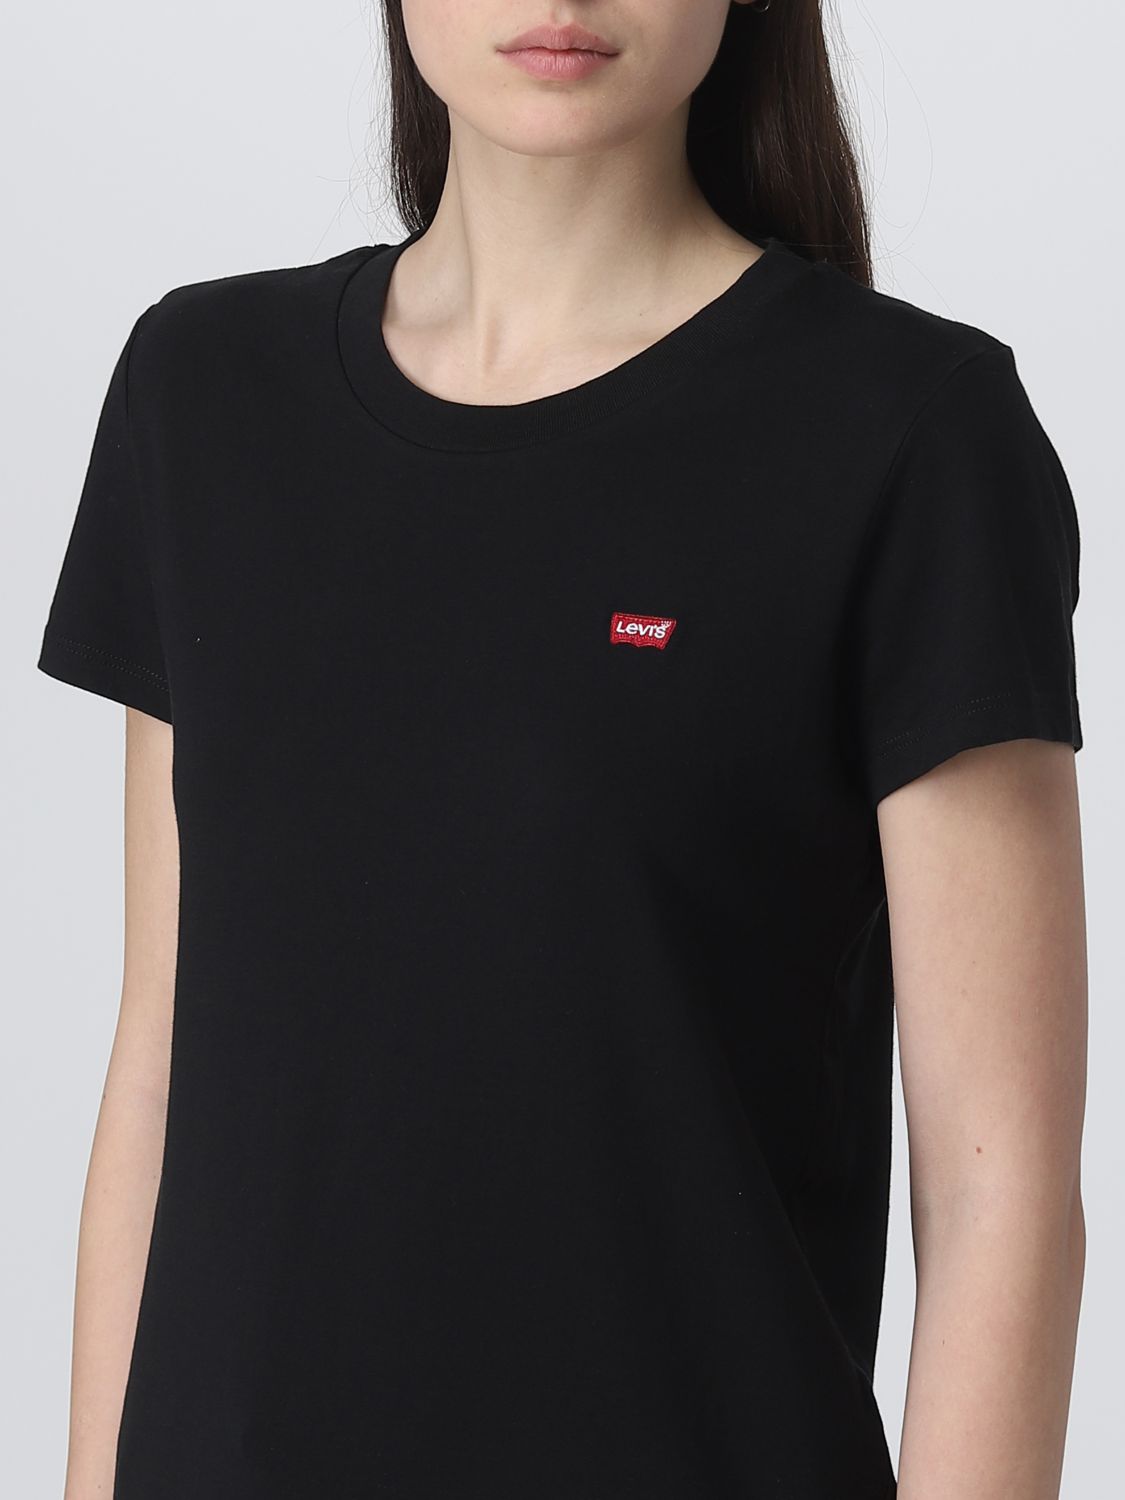 LEVI'S: t-shirt for woman - Black | Levi's t-shirt 391850008 online on ...